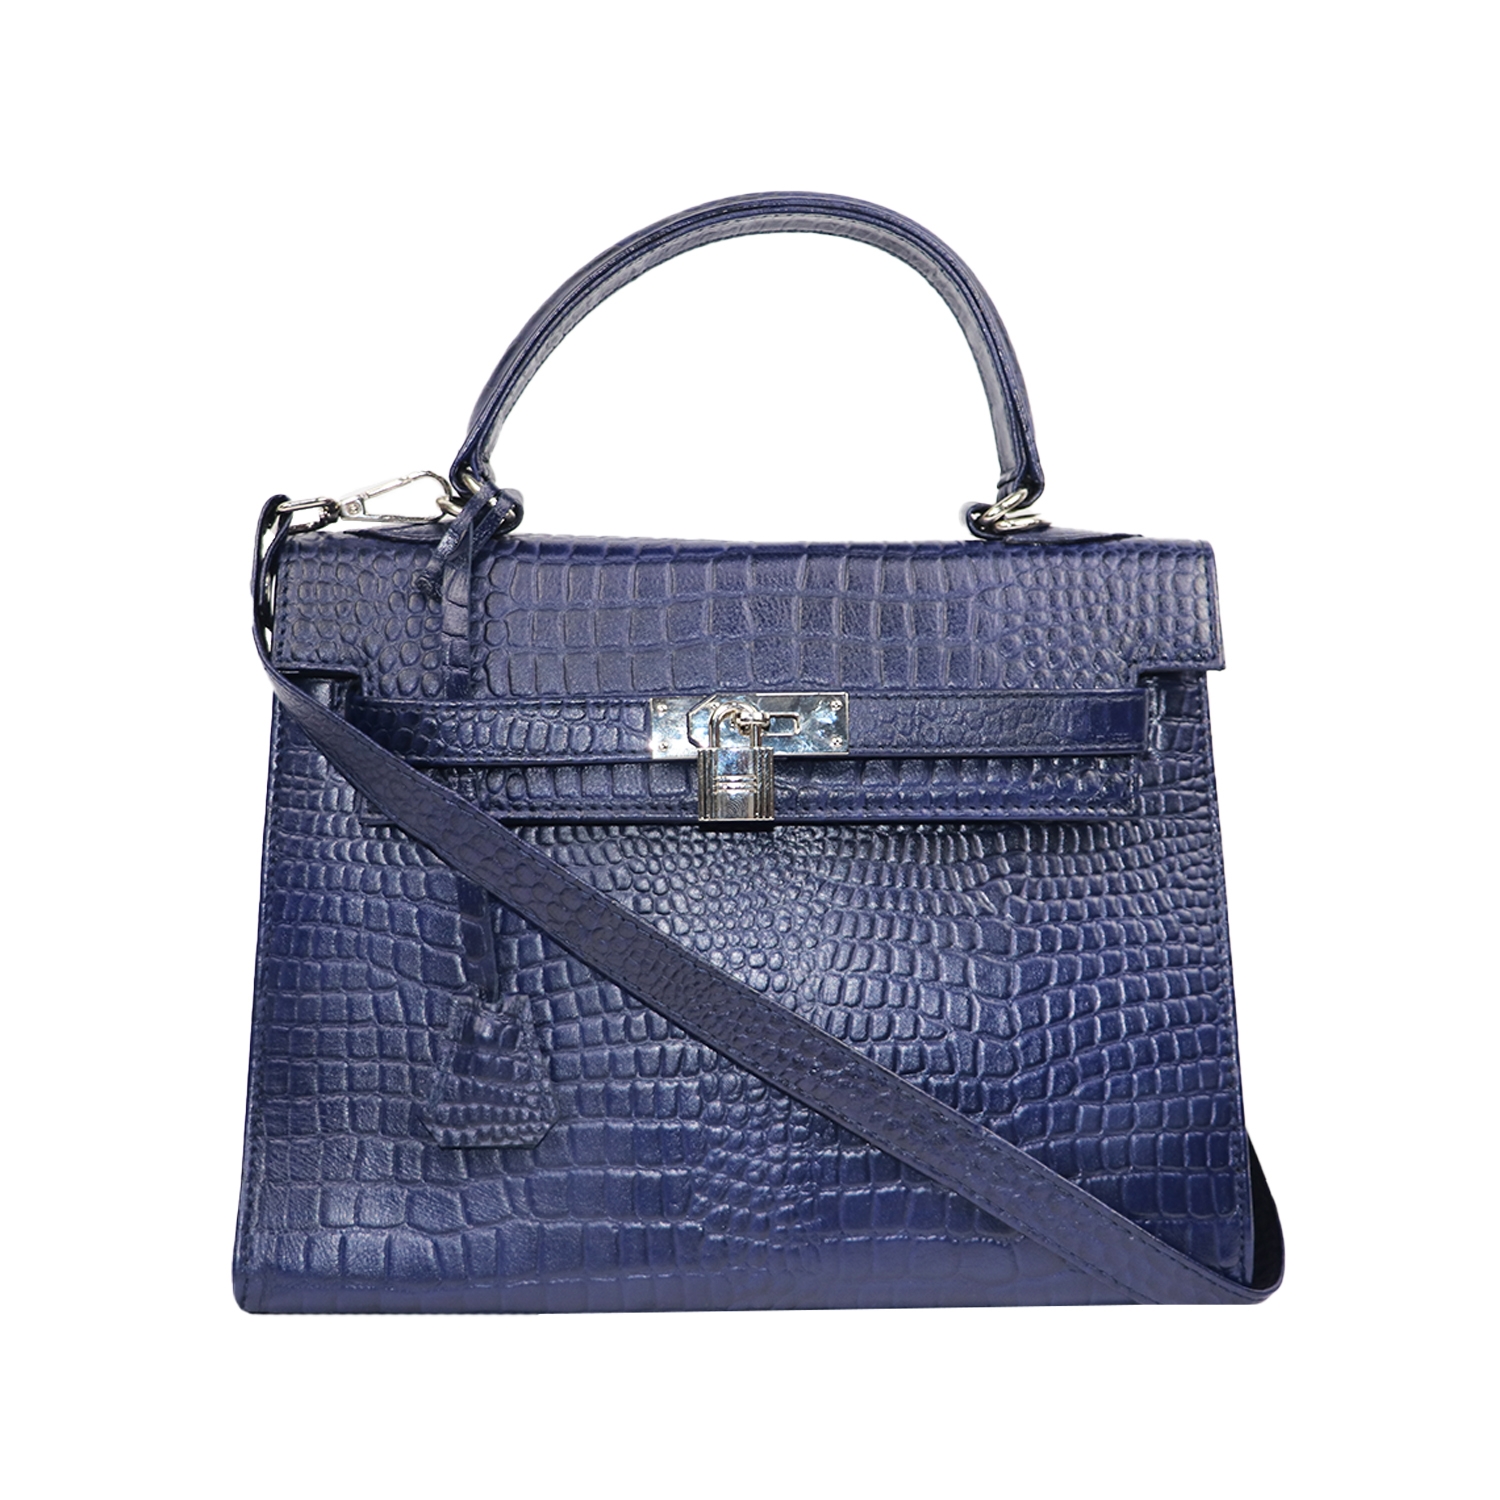 Designer Blue cute handbag with unique lock